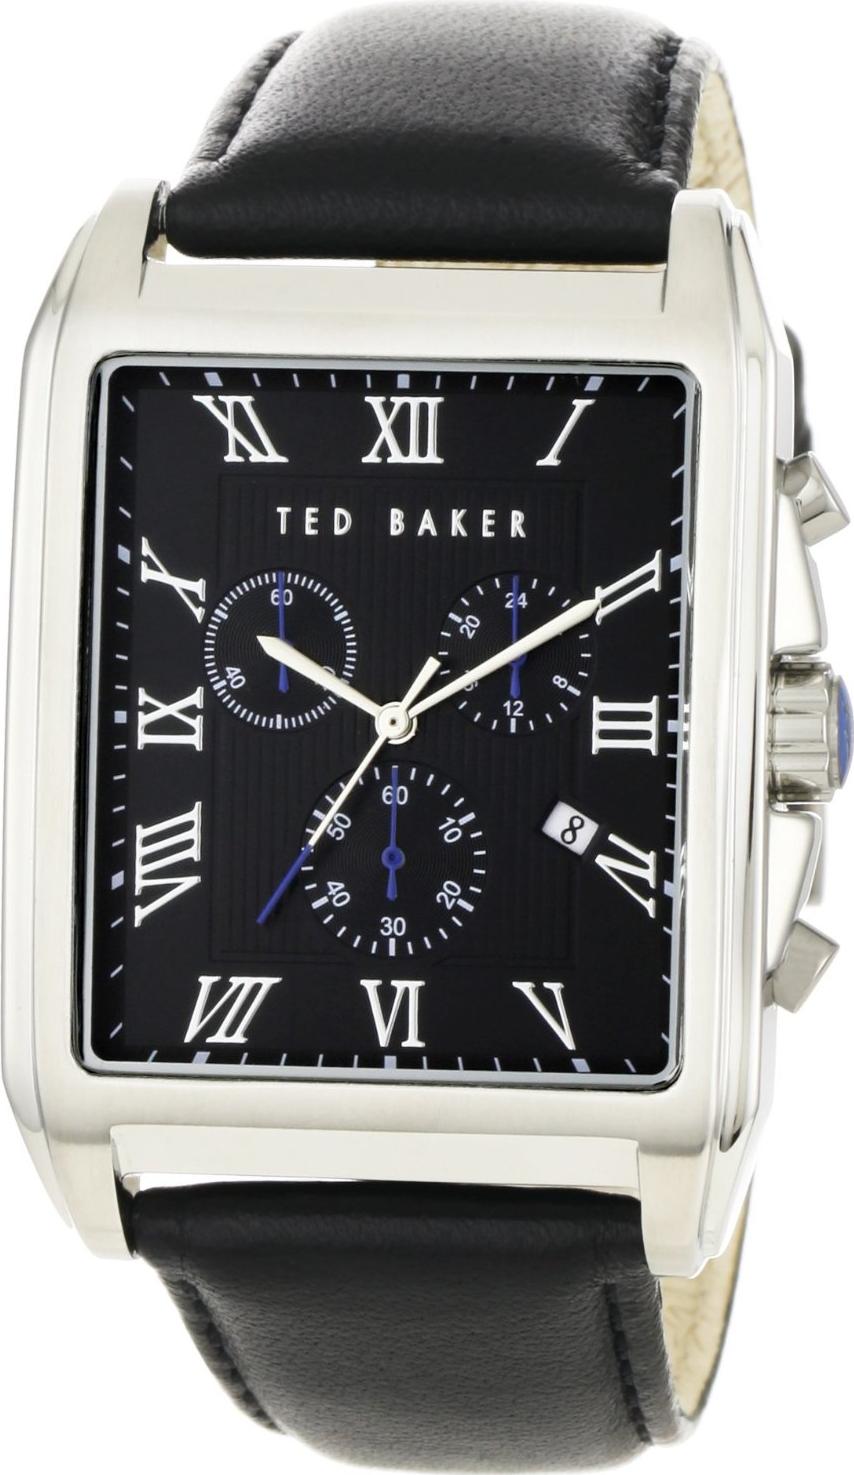 Ted Baker Men's TE1058 watch Actual Size Image